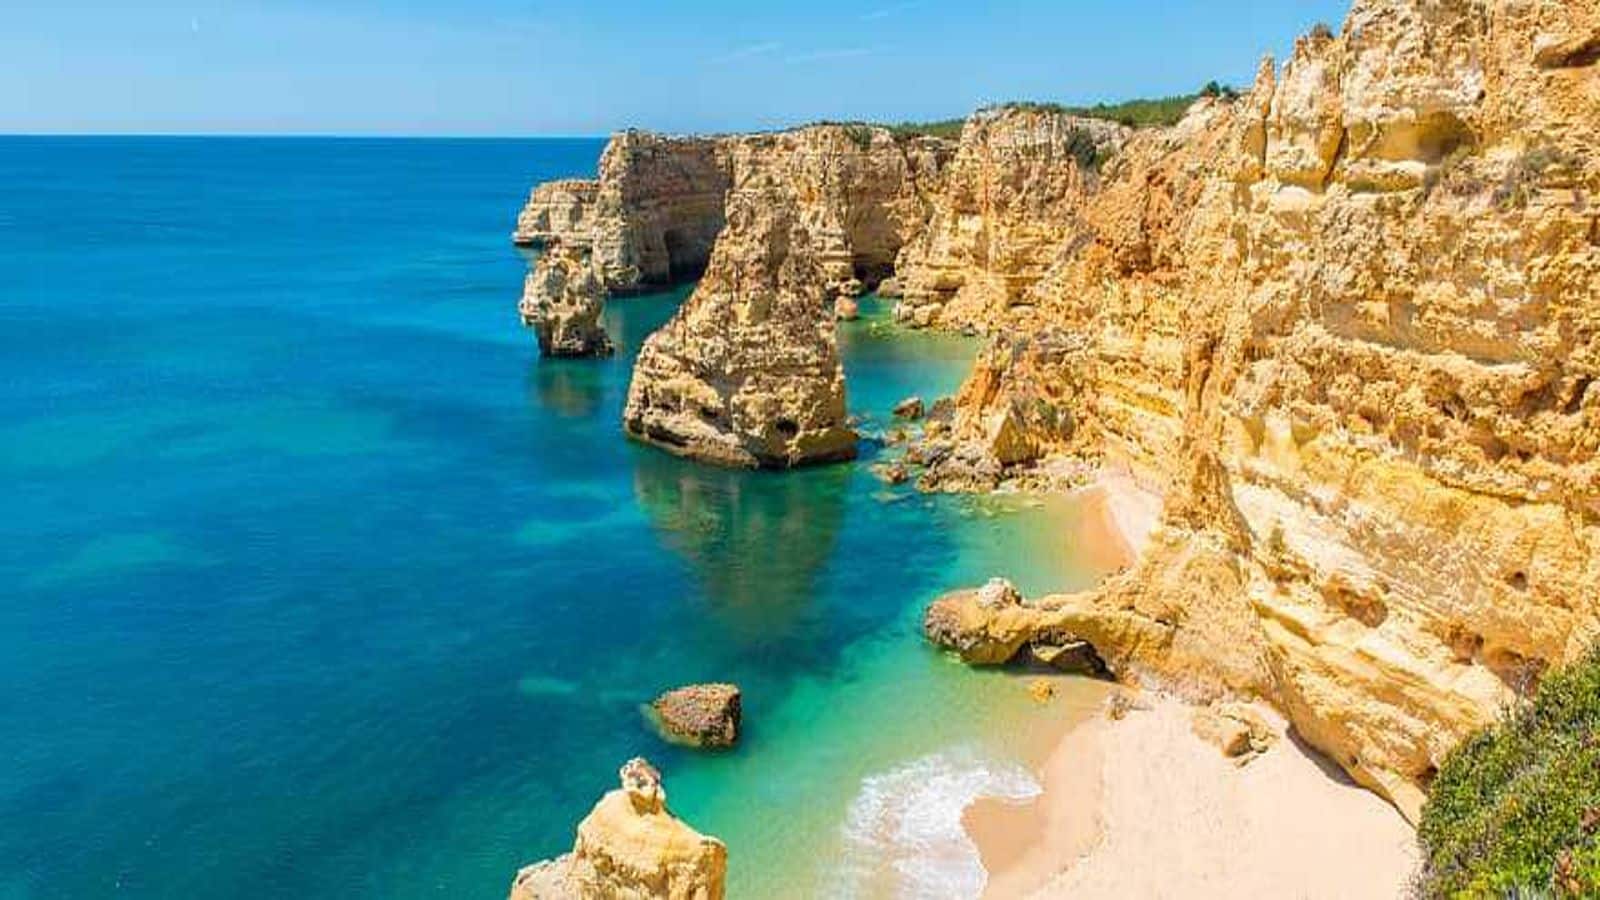 Experience Portugal's seaside splendor with Algarve's coastal charms